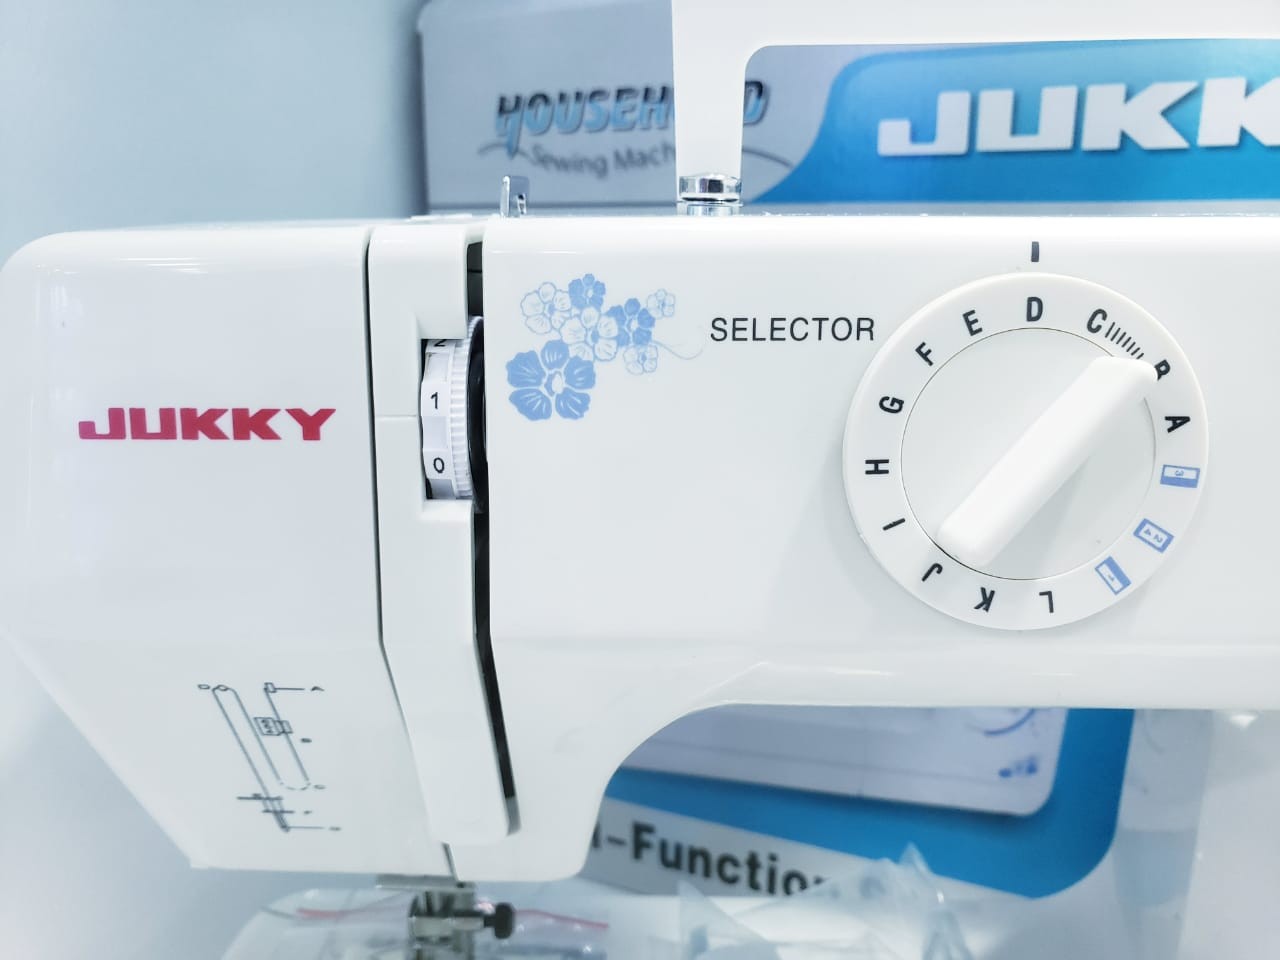 equipos profesionales - Maquina de coser Electrica multifuncional profesional JUKKY FH6224 8